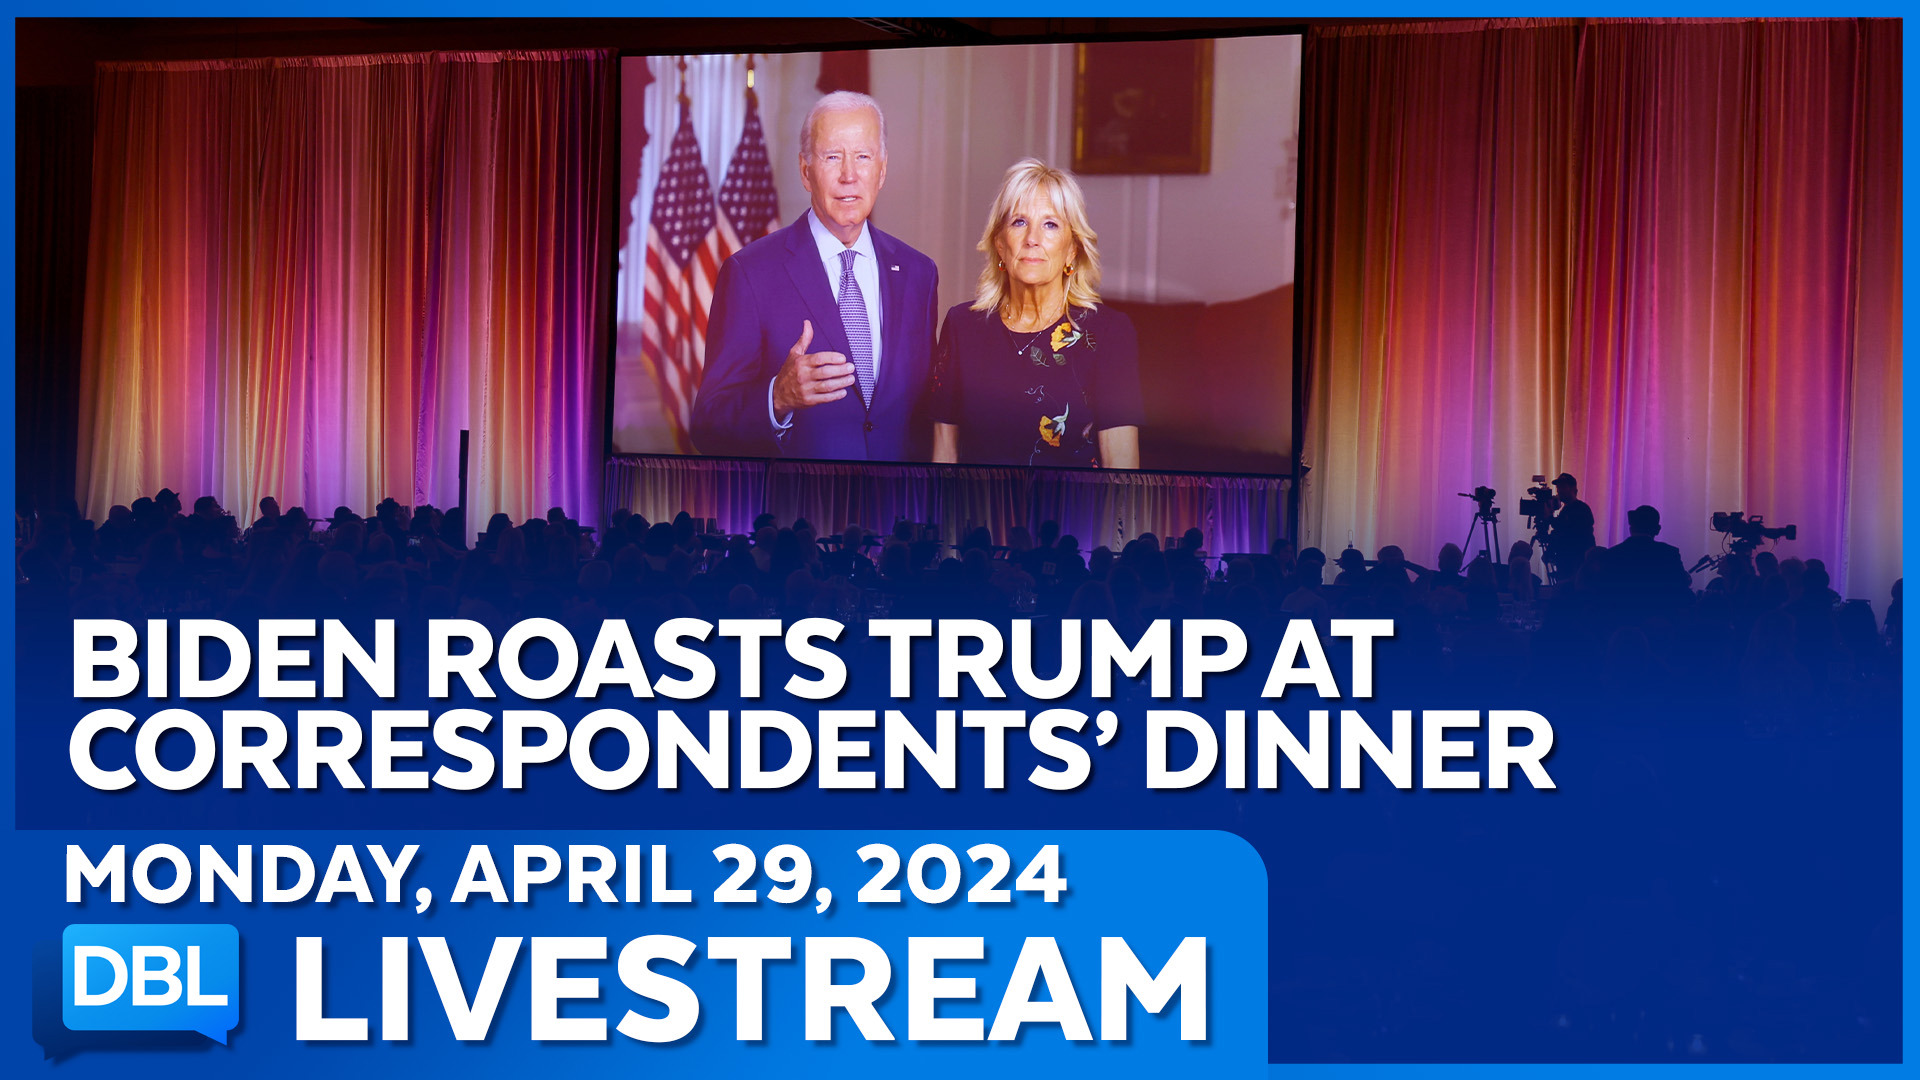 Biden's Hilarious Roast Of Trump At The Correspondents' Dinner